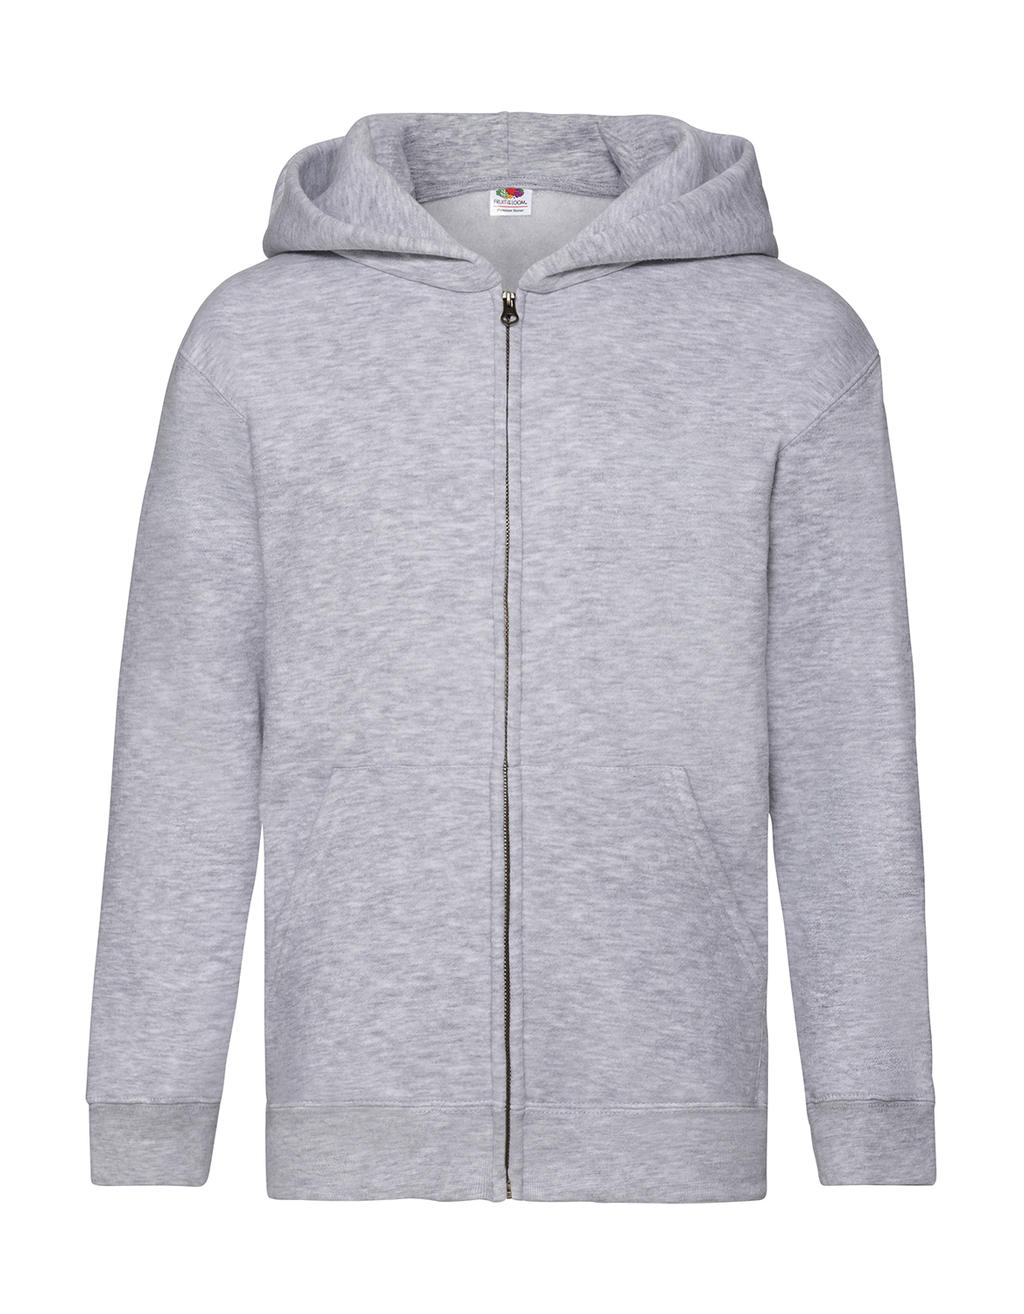  Kids Premium Hooded Sweat Jacket in Farbe Heather Grey